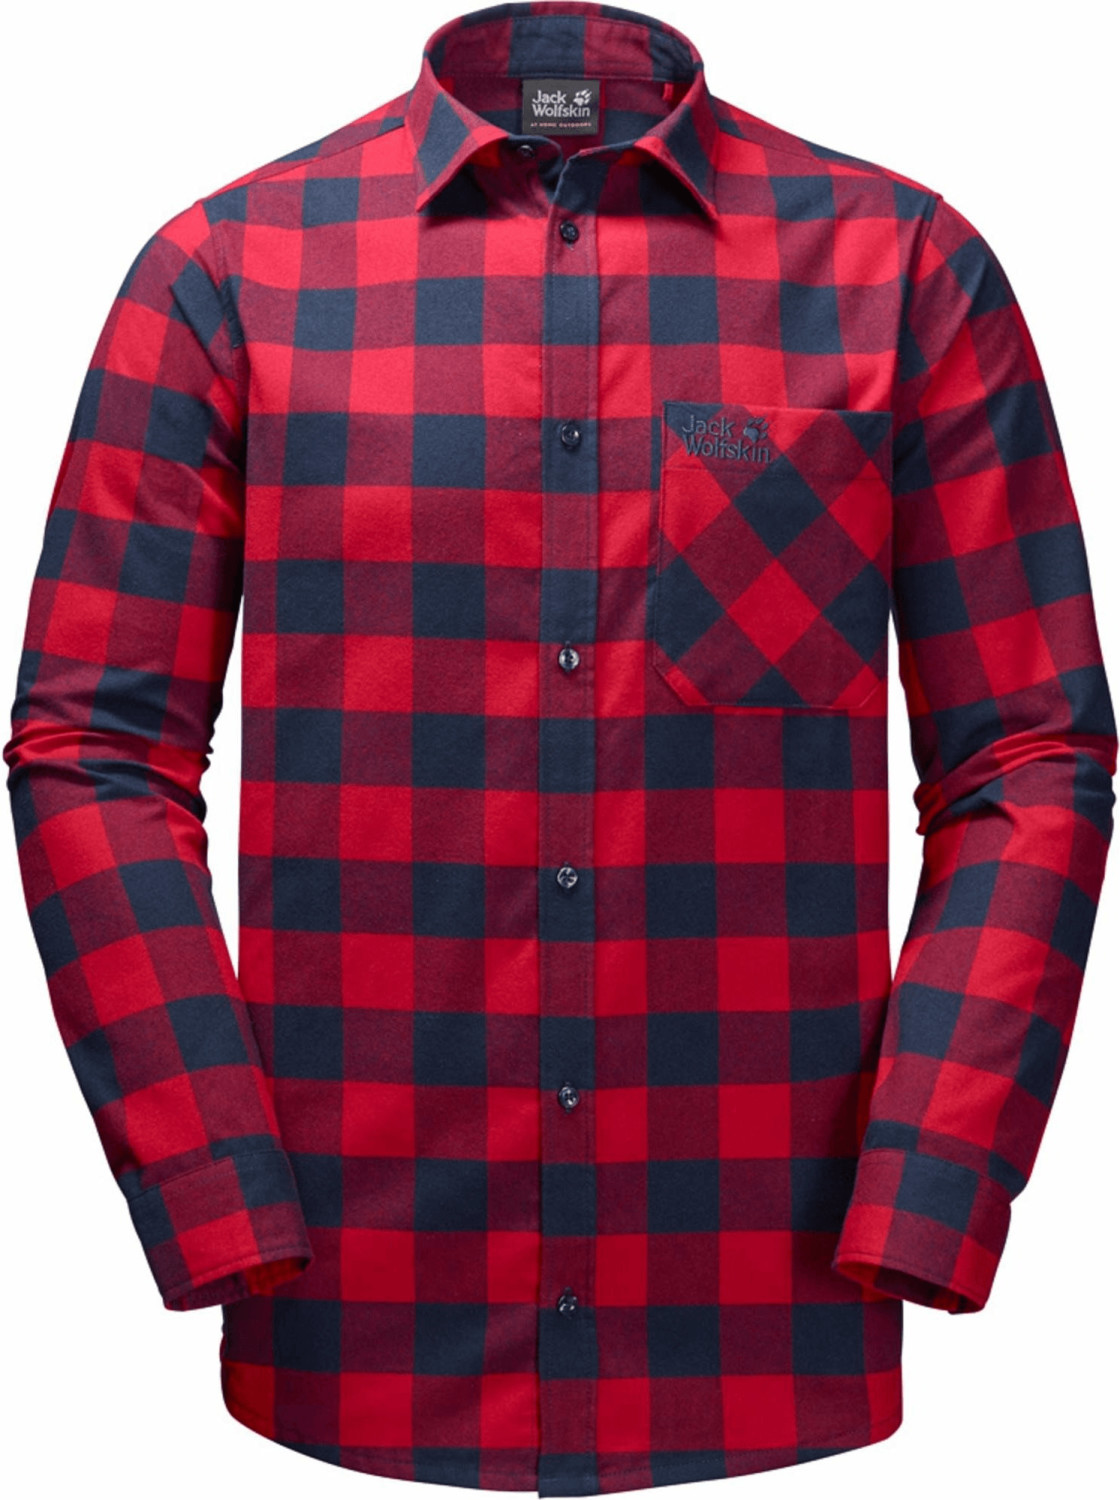 Jack Wolfskin Red River Shirt (1402551) indian red checks